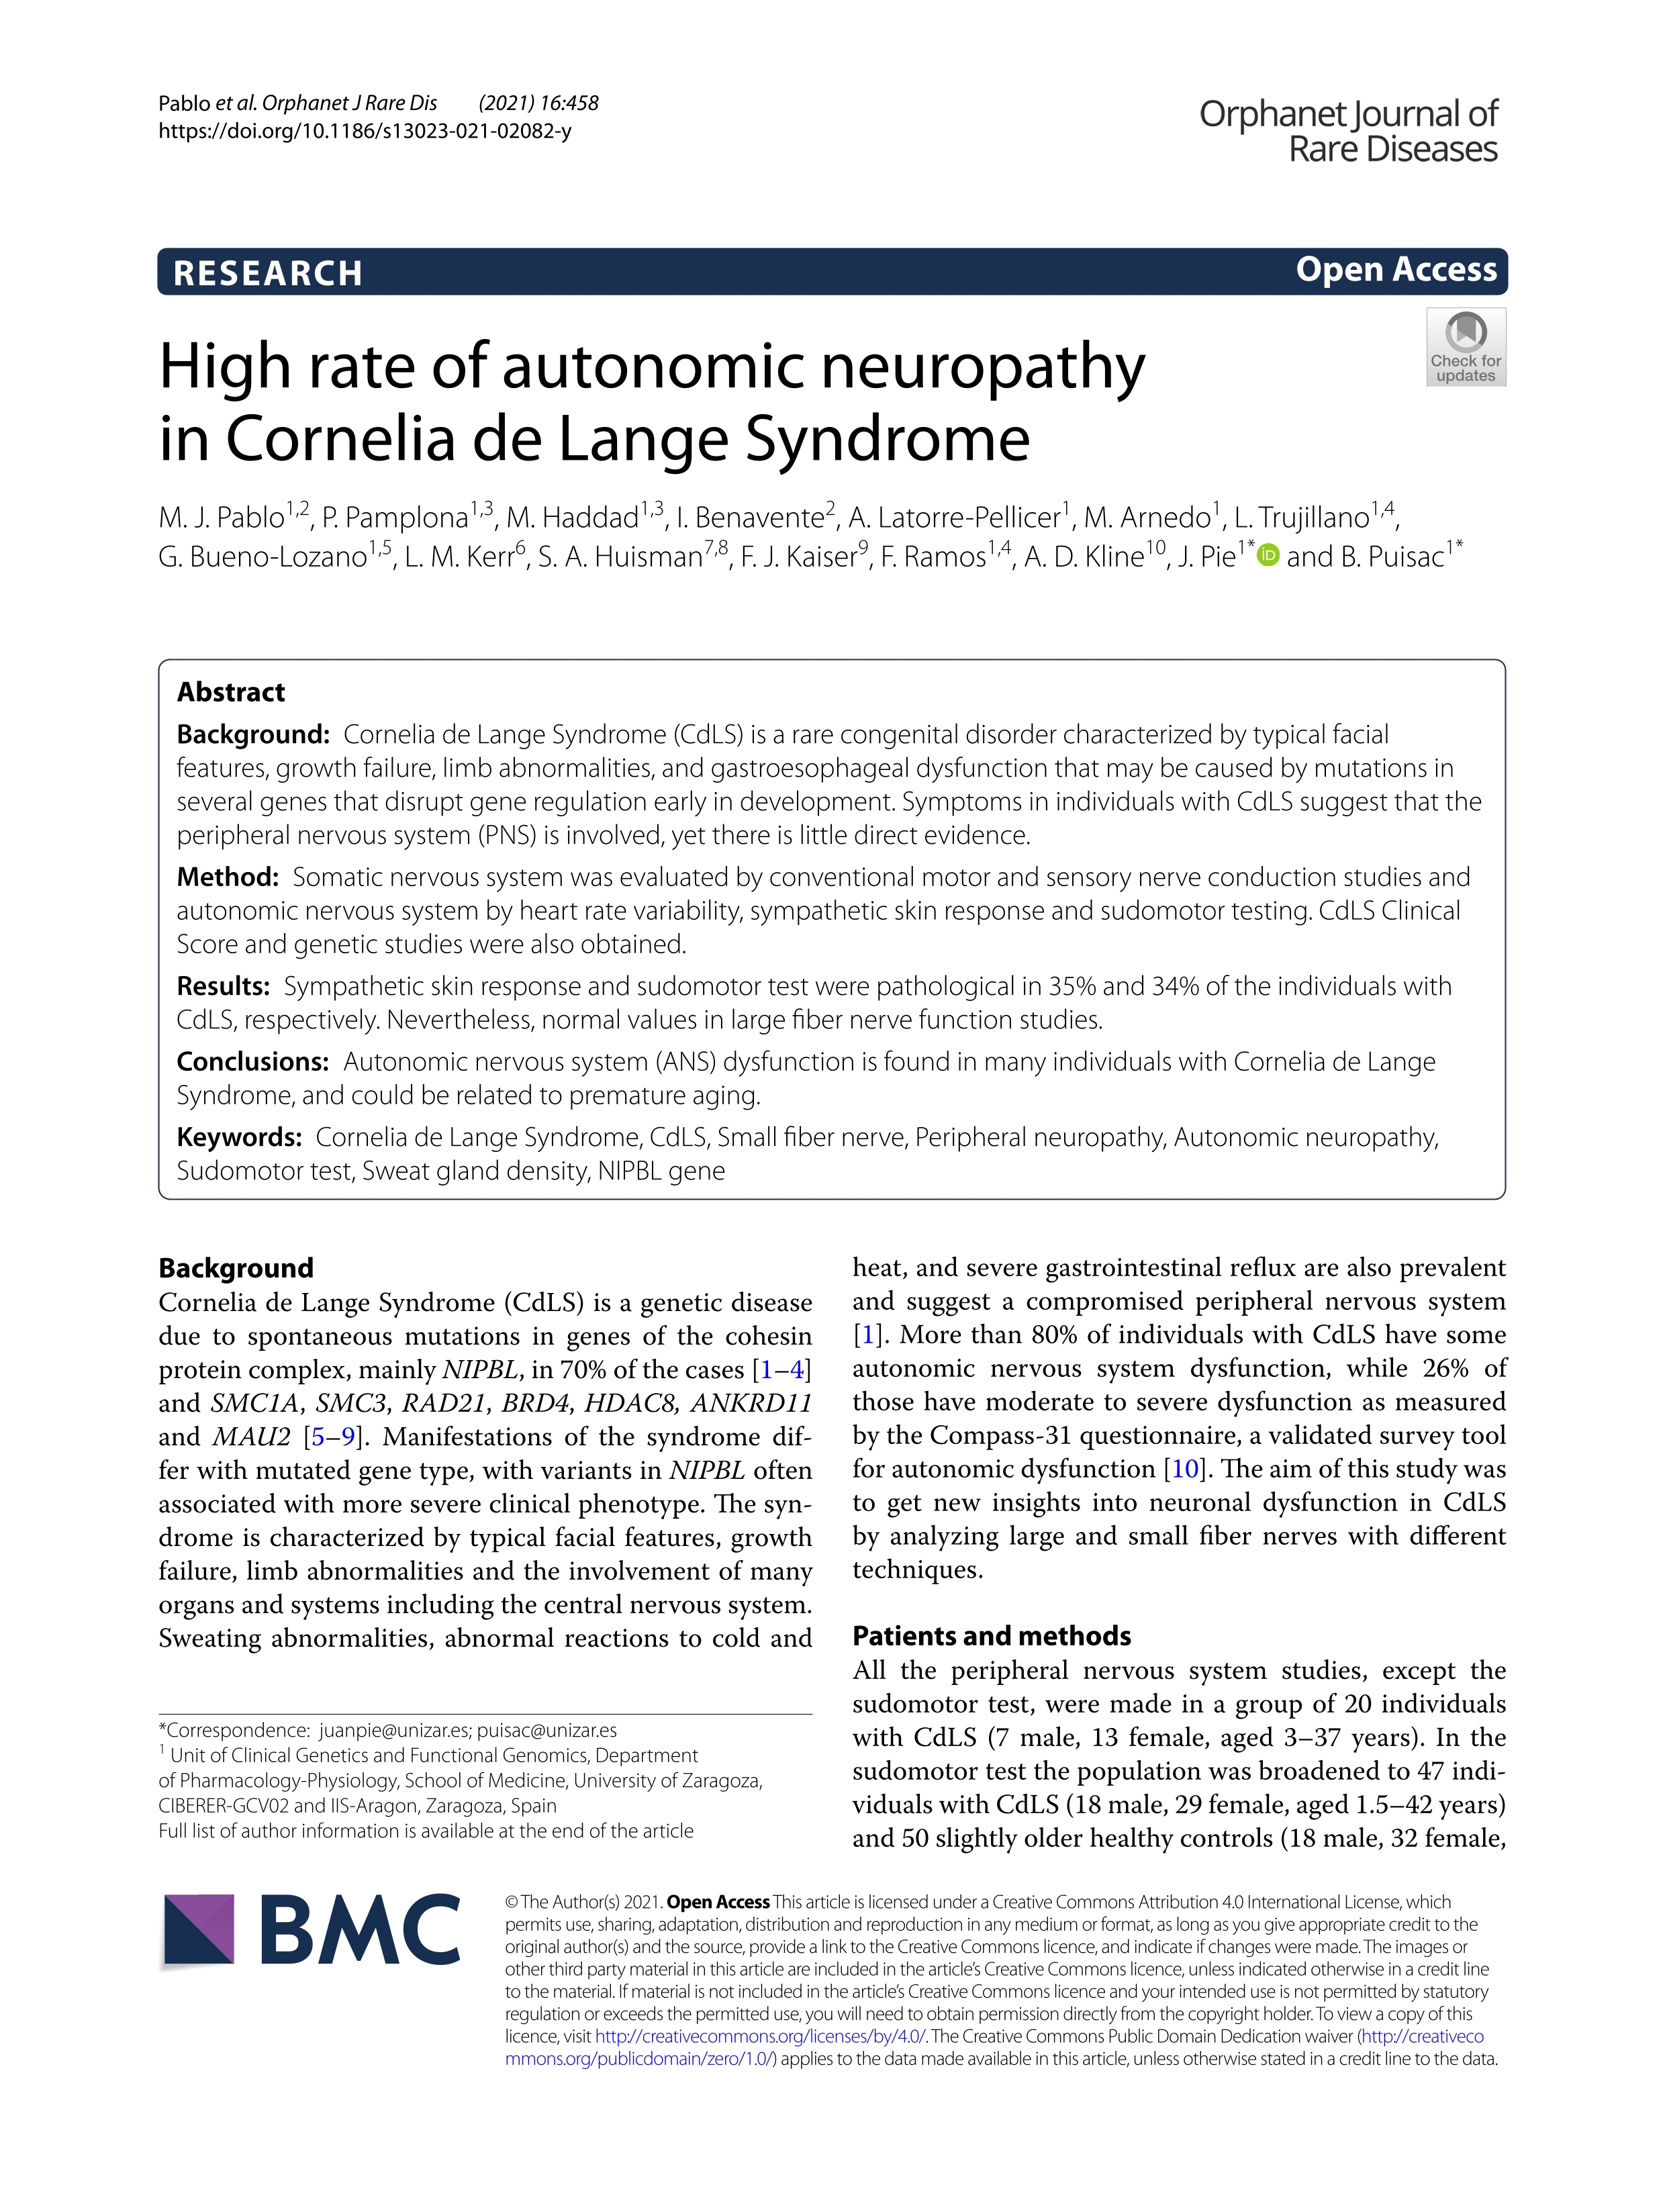 High rate of autonomic neuropathy in Cornelia de Lange Syndrome